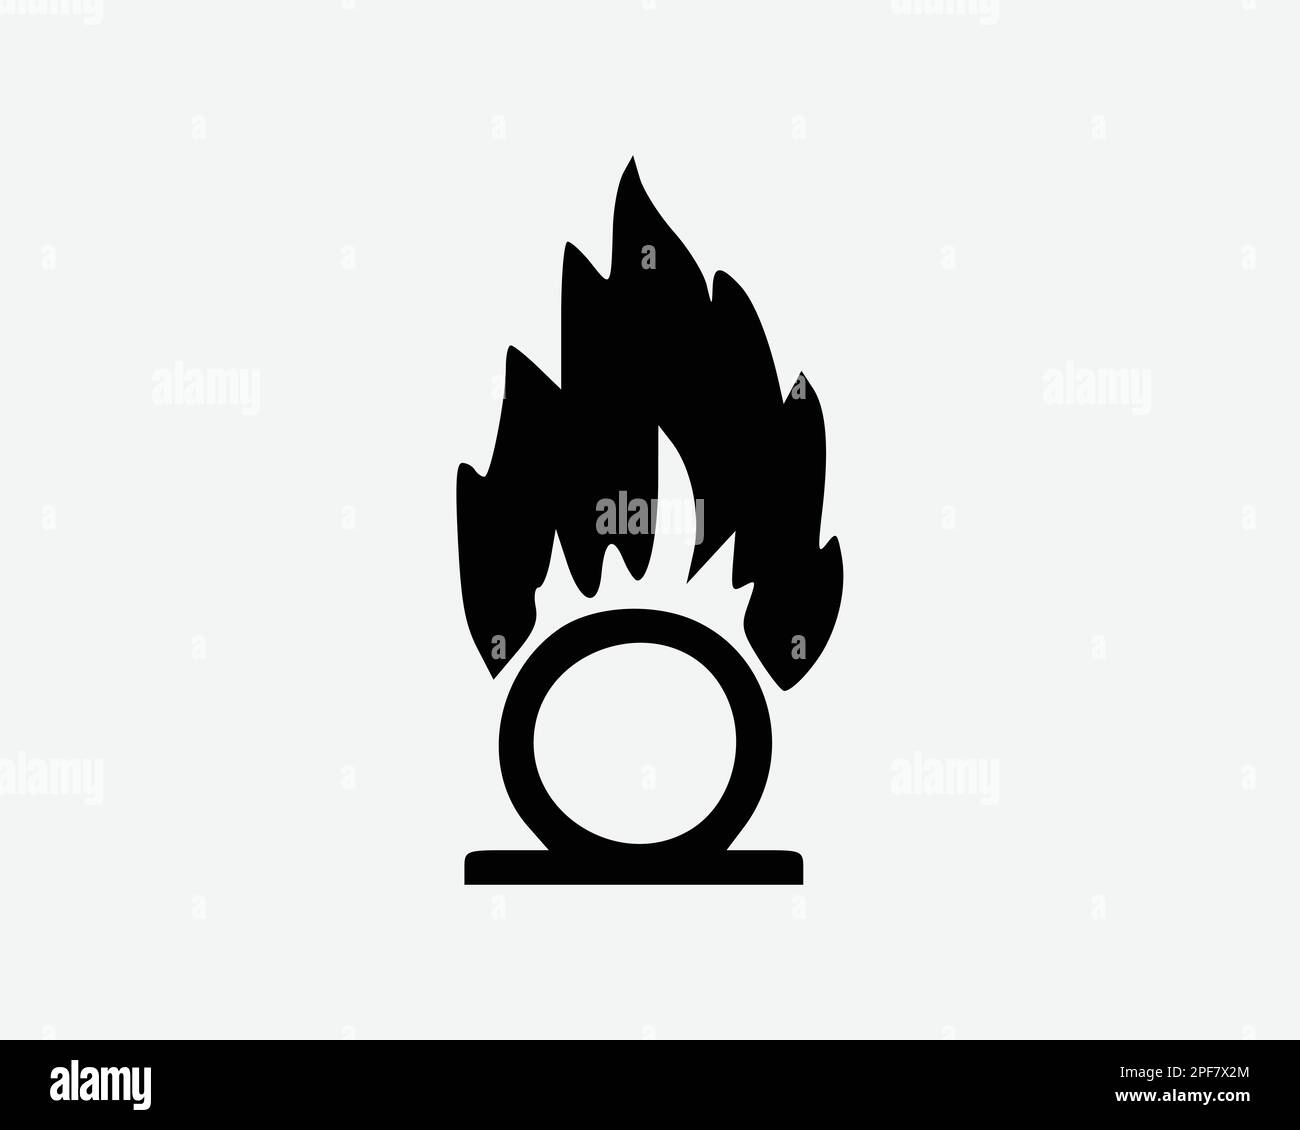 Fireball Icon Fire Ball Burn Burning Element Energy Power Black White Silhouette Symbol Sign Graphic Clipart Artwork Illustration Pictogram Vector Stock Vector